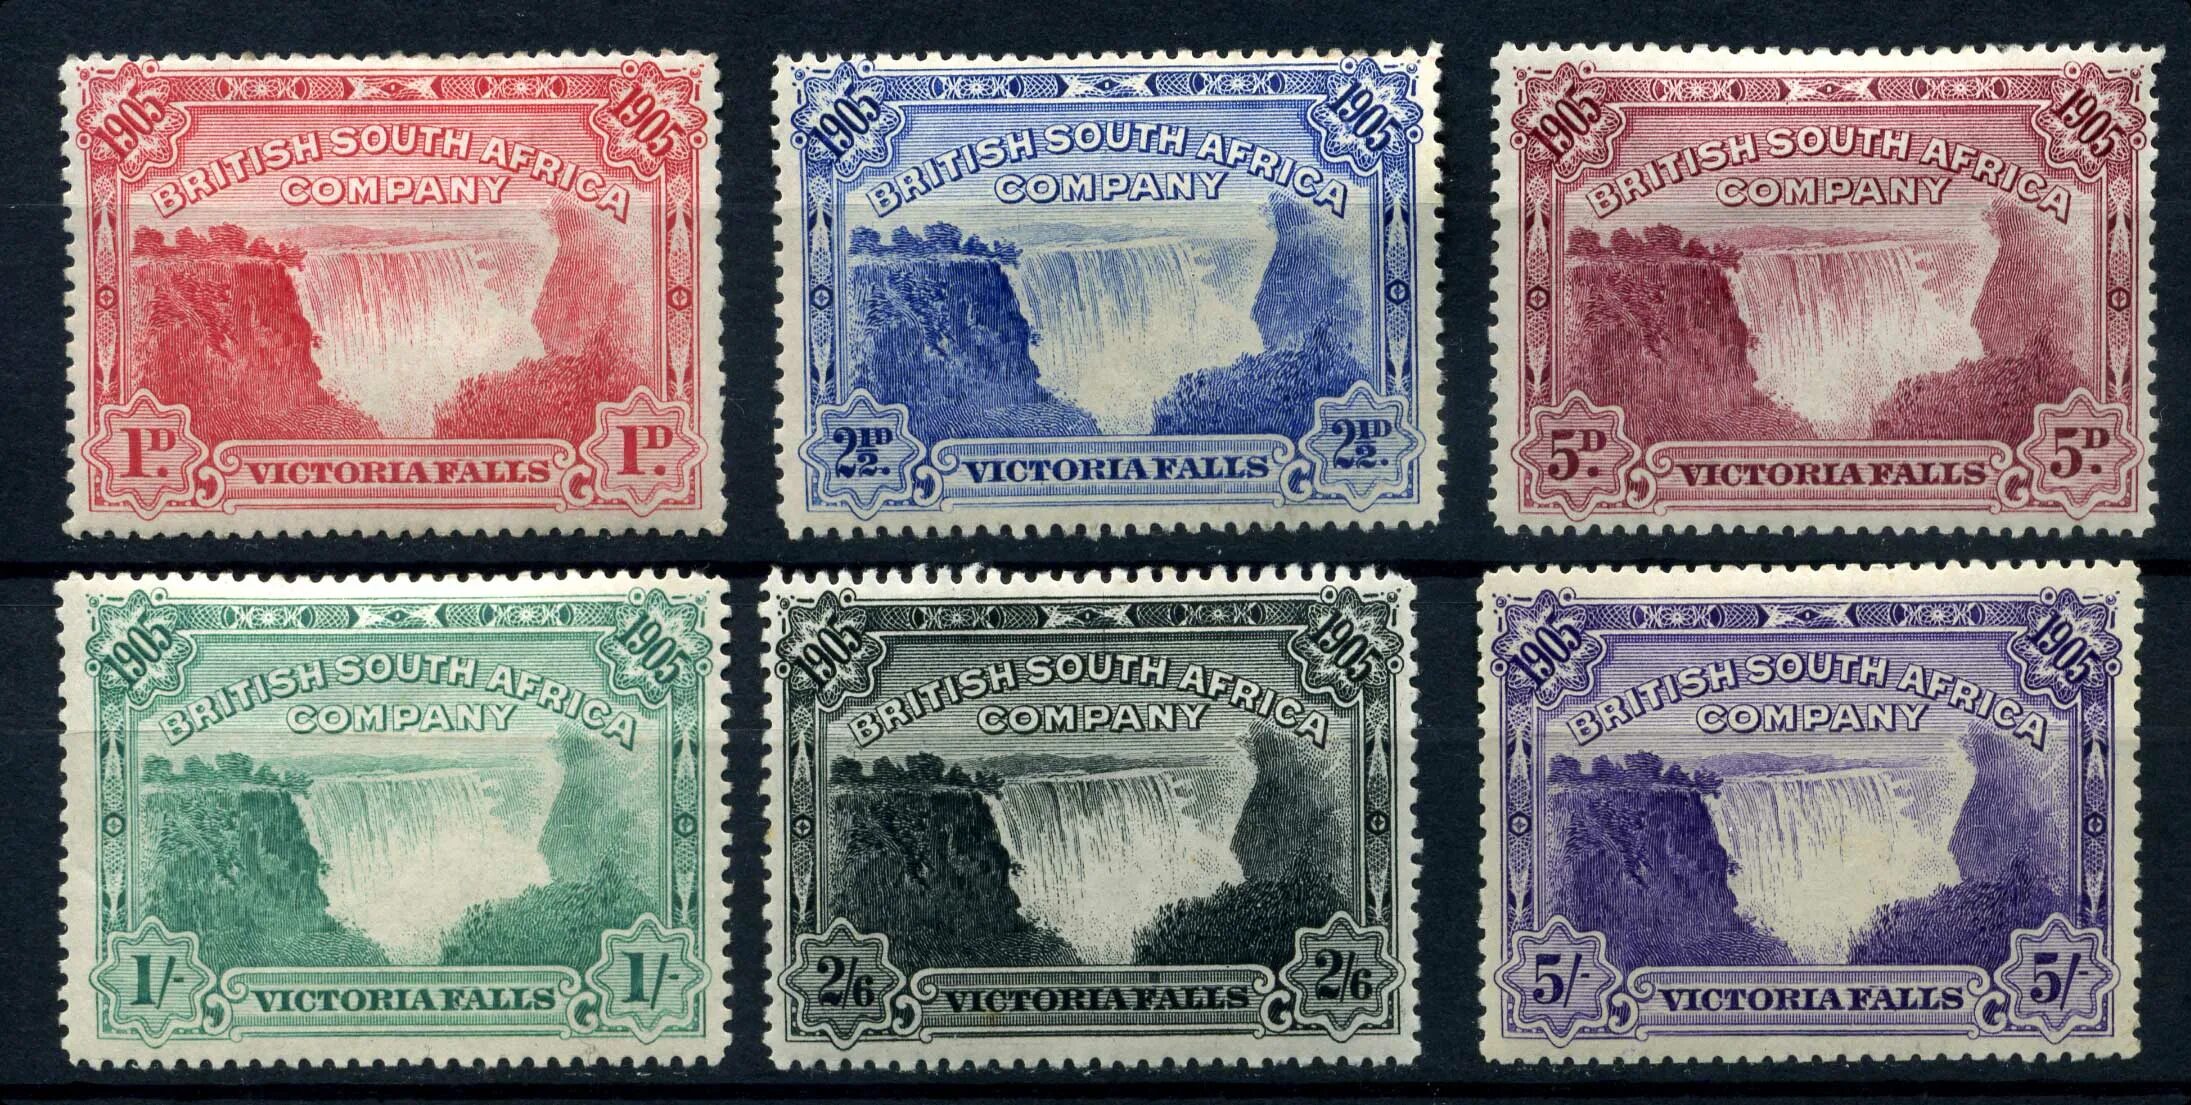 O s co. Почтовые марки британских колоний. Марки колоний Великобритании. Почтовые марки колонии Великобритании. Кипр колония Великобритании.